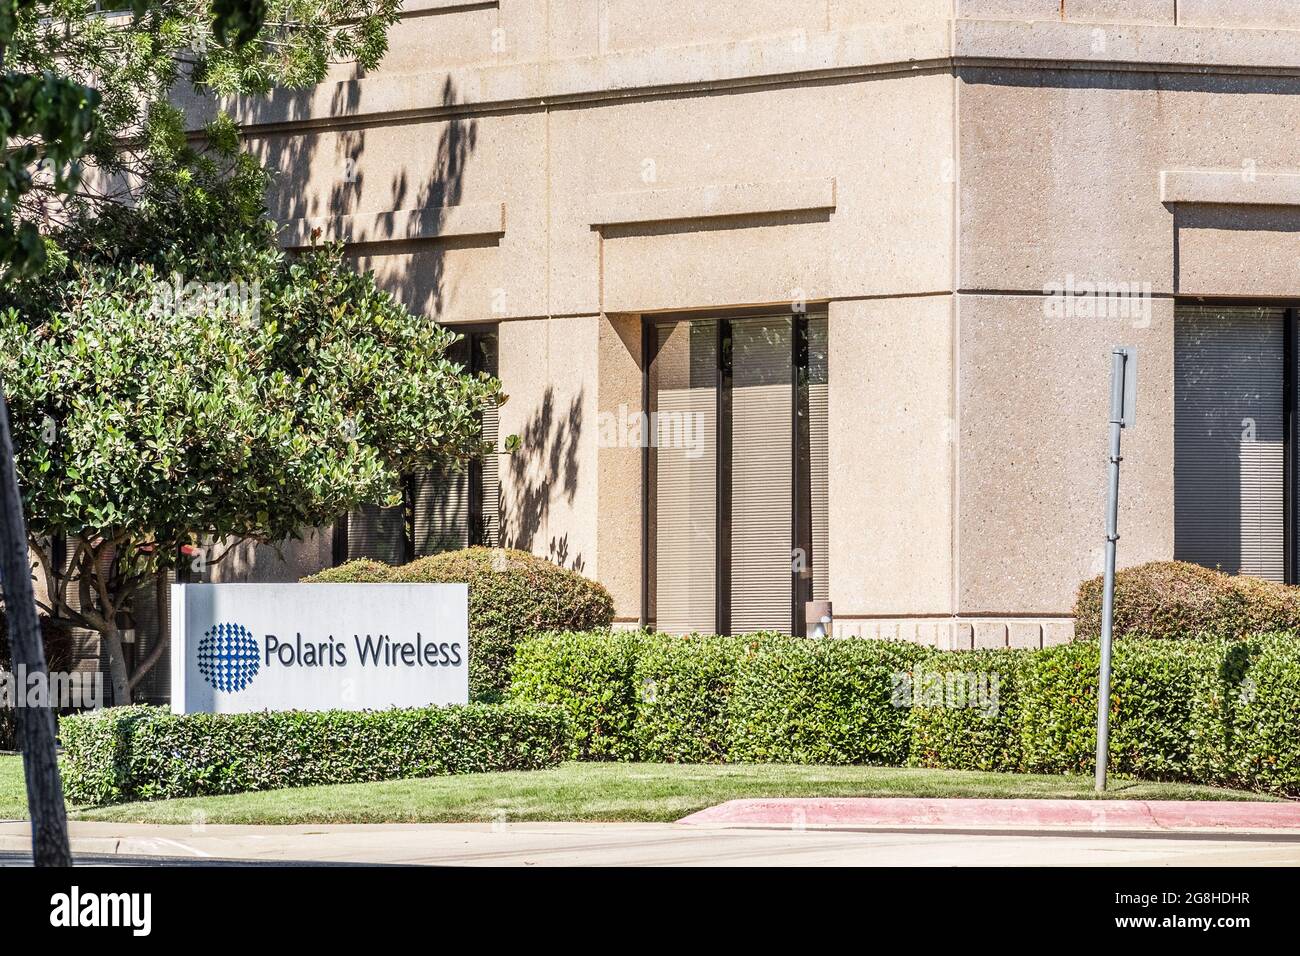 Sep 26, 2020 Mountain View / CA / USA - Polaris Wireless headquarters in Silicon Valley; Polaris Wireless, Inc. develops software based location syste Stock Photo